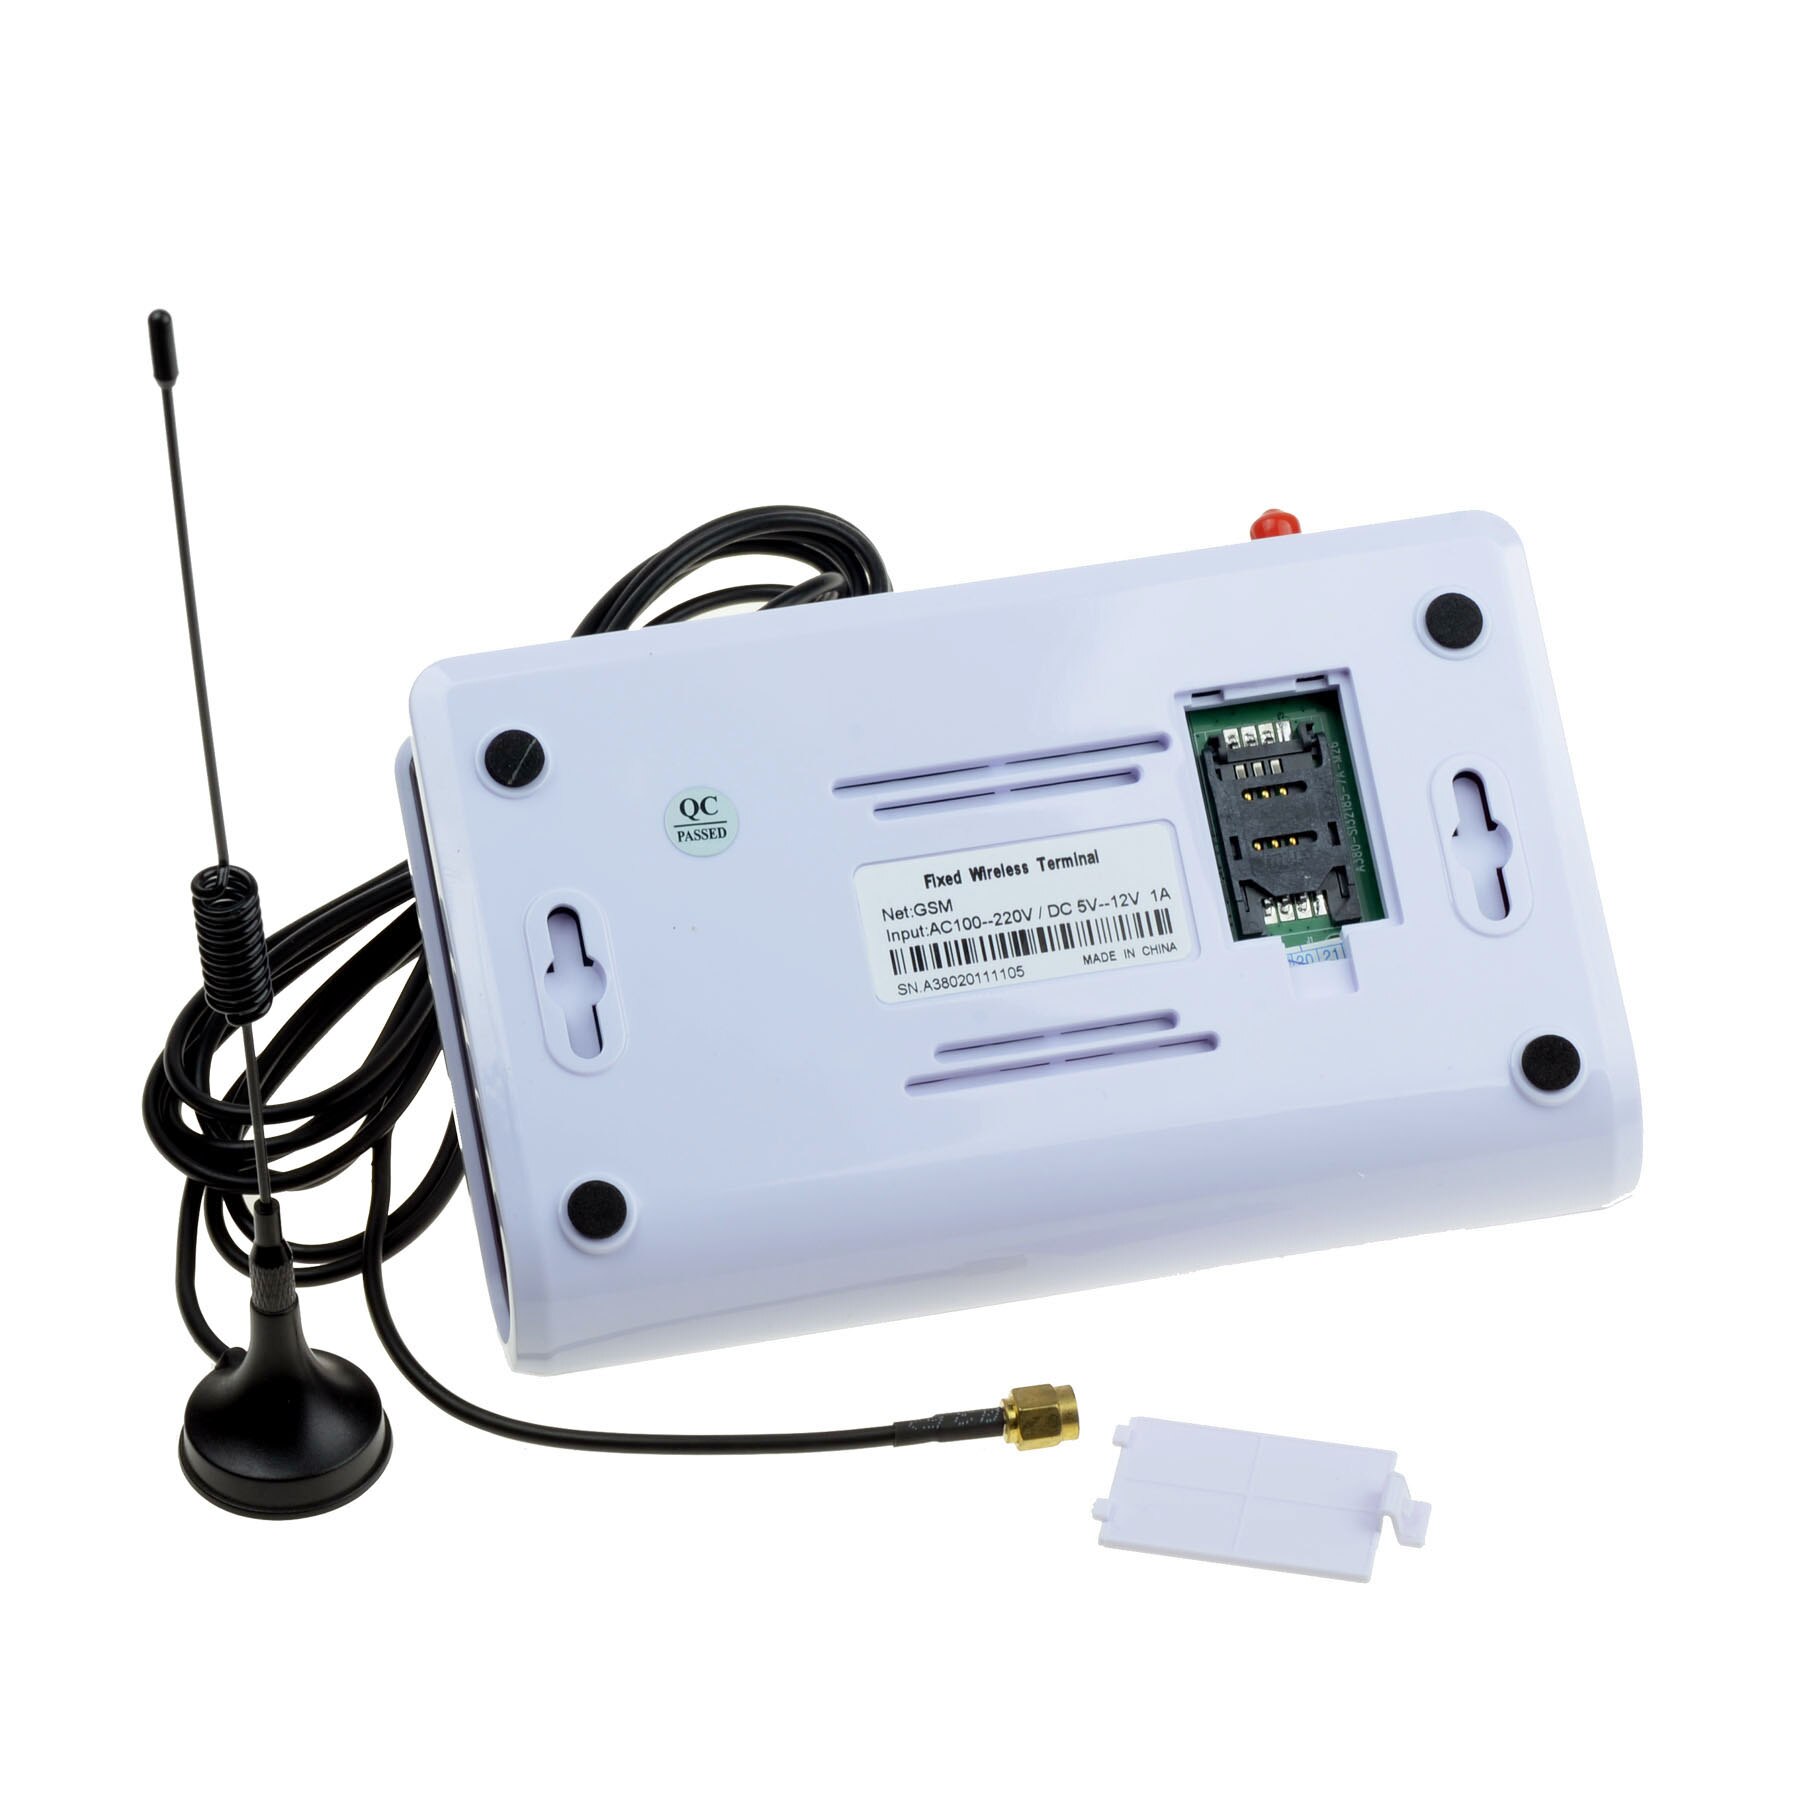 Adusun gsm 850/900/1800/1900 mhz fast trådløs terminal router med lcd support alarm system pabx opkalds id klar stemme stabil